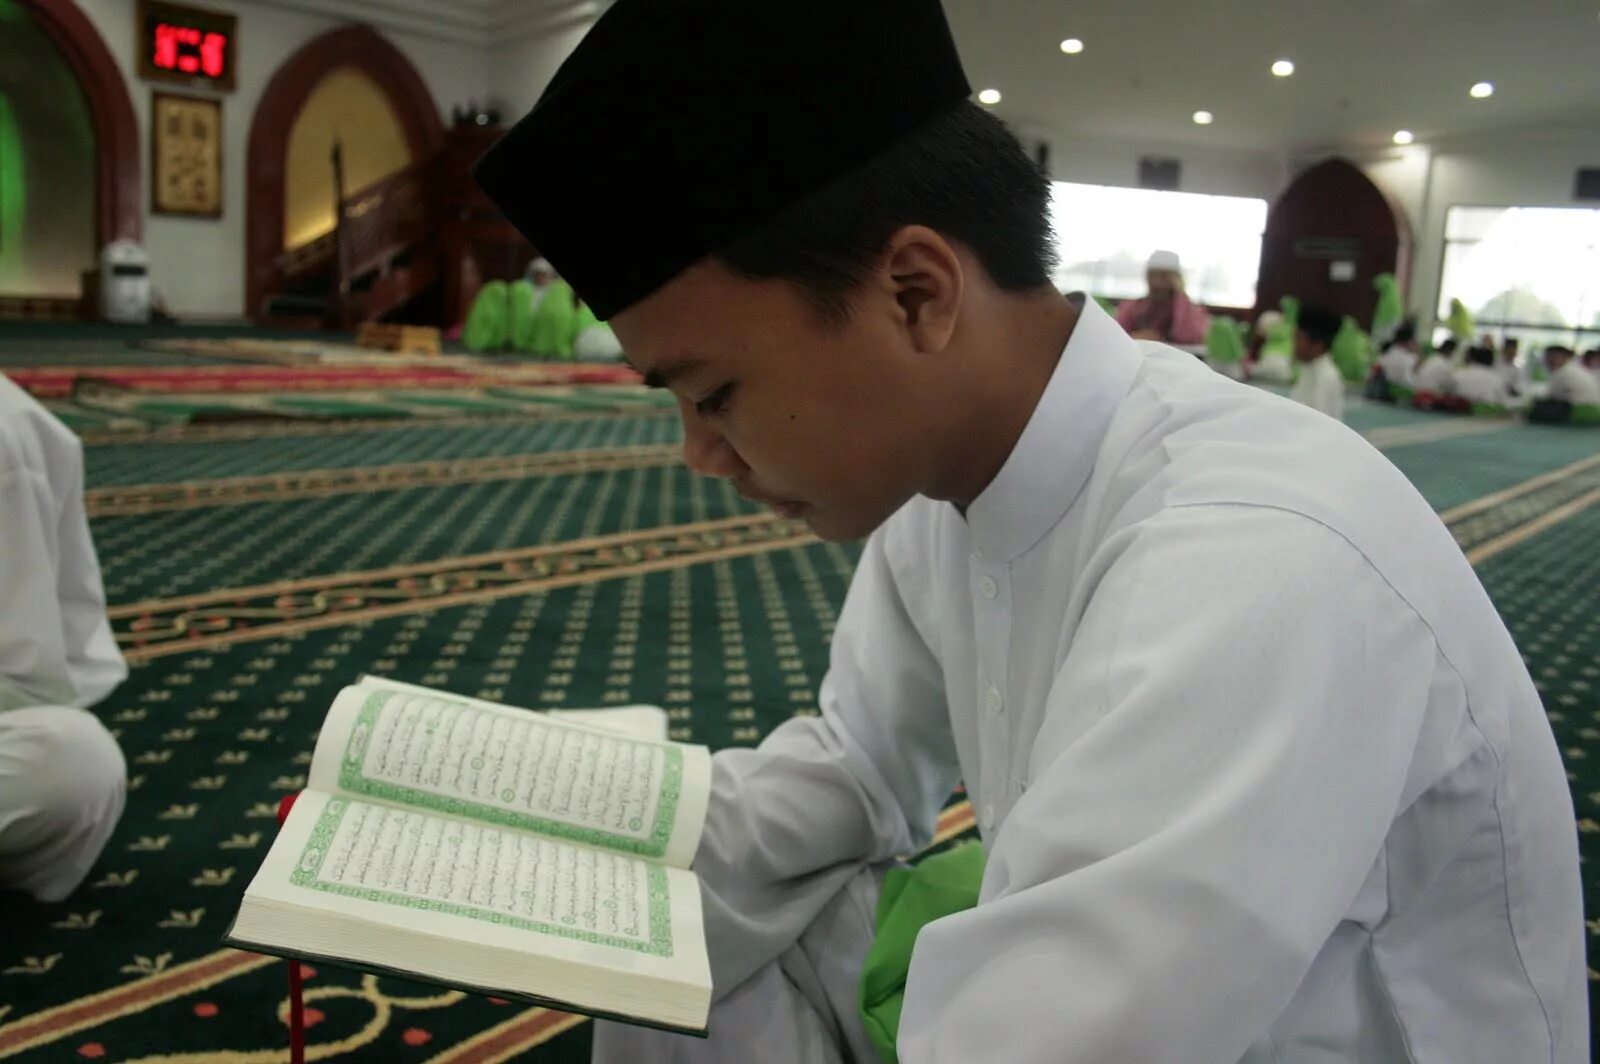 Коран. Чтение Корана. Открытый Коран в руках. Коран фото.